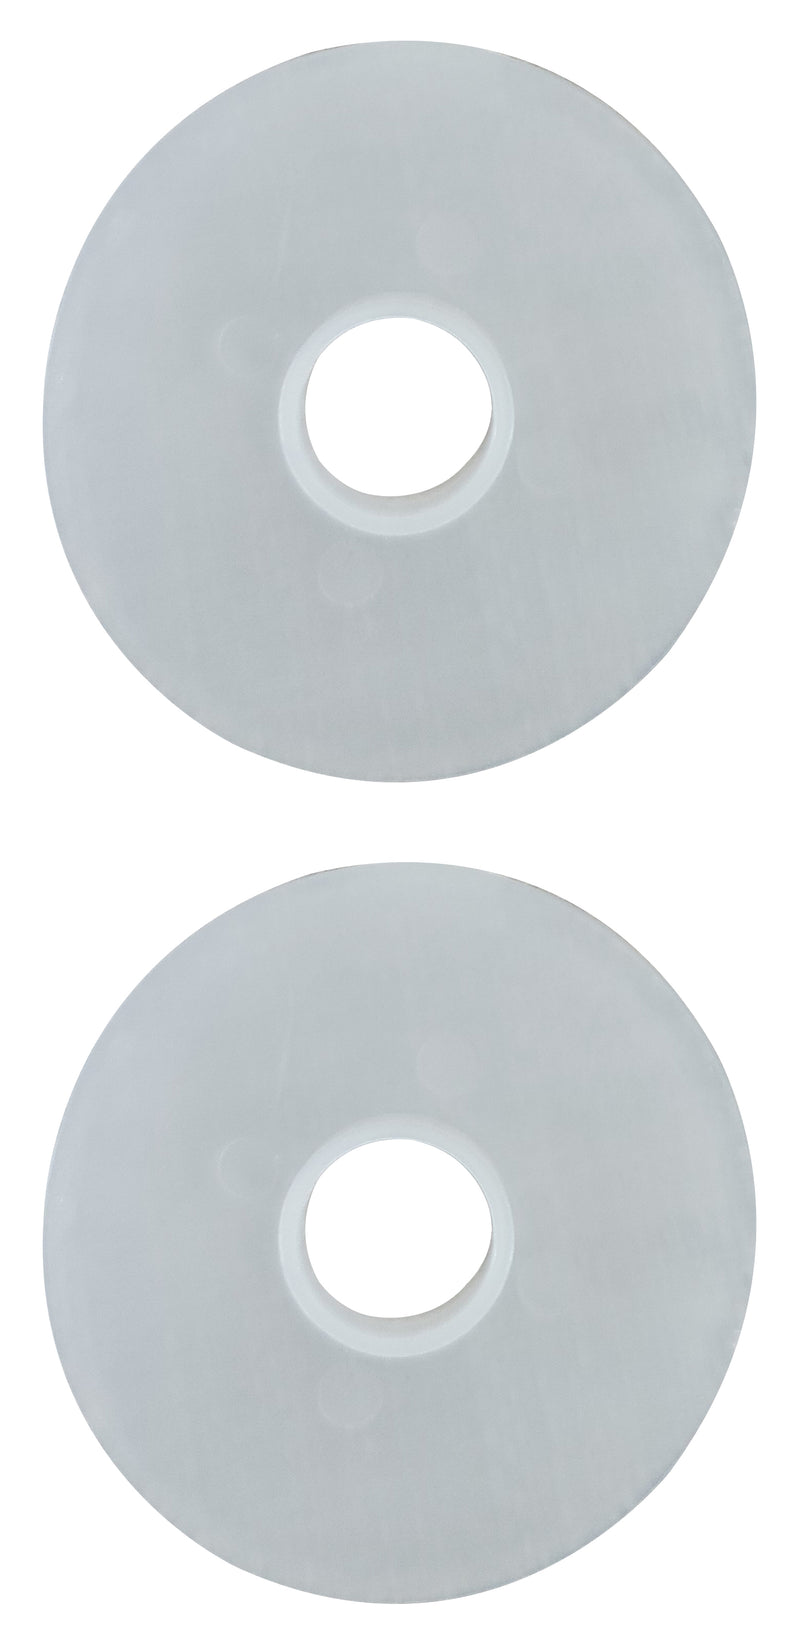 ISOGAS112DW Junta de plástico blanco de 1-1/2" de diámetro, par